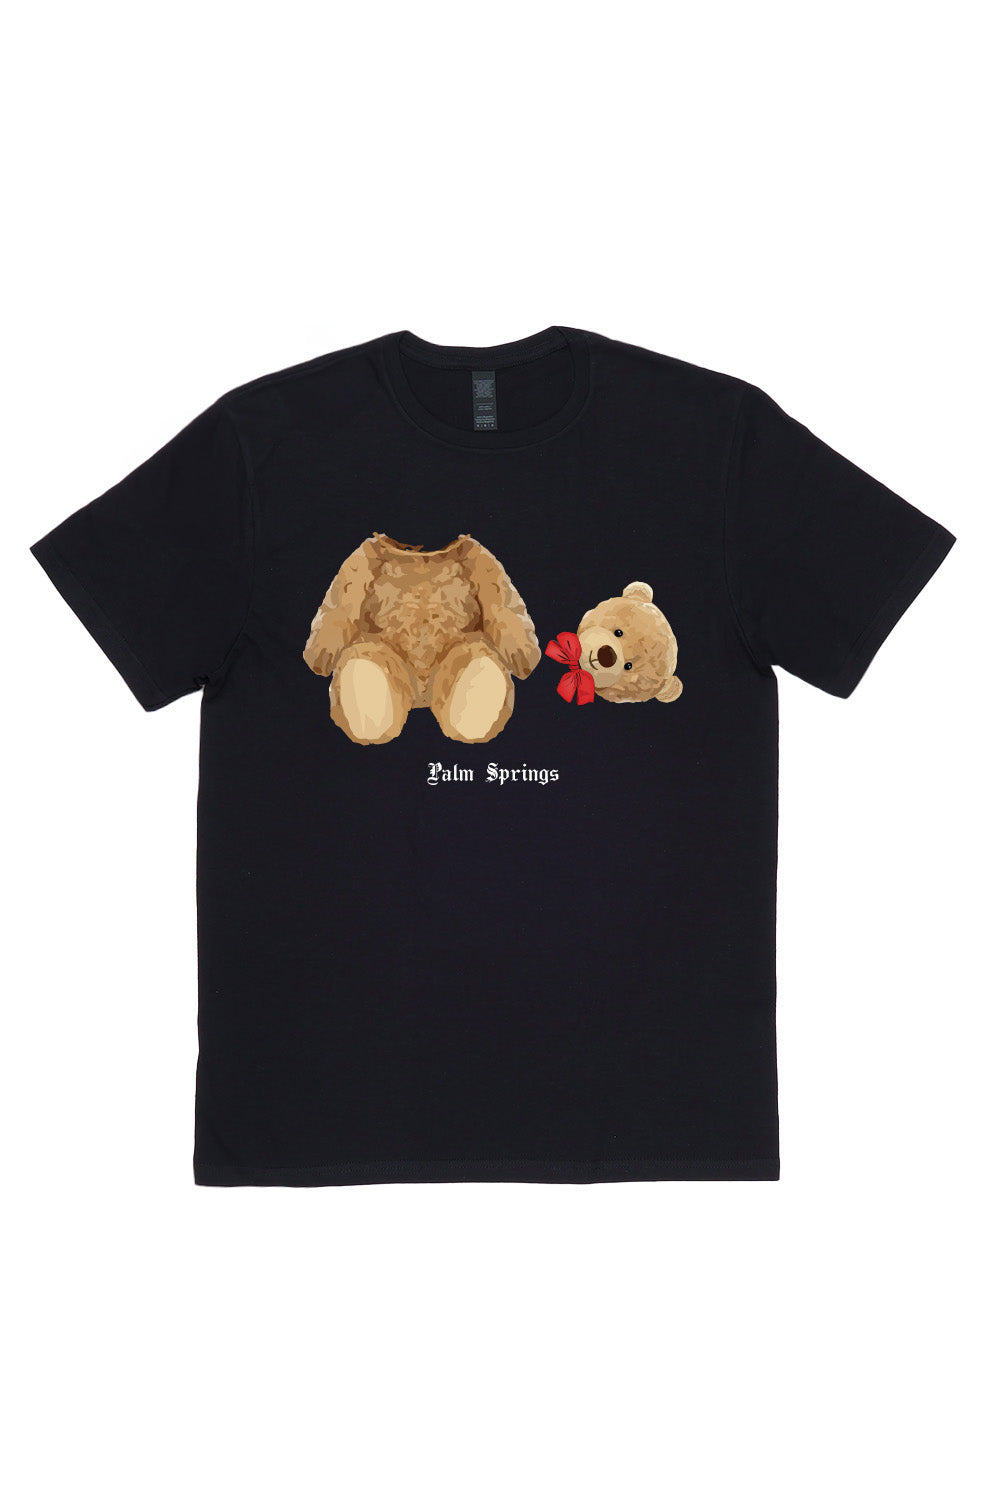 Palm Springs Teddy T-Shirt